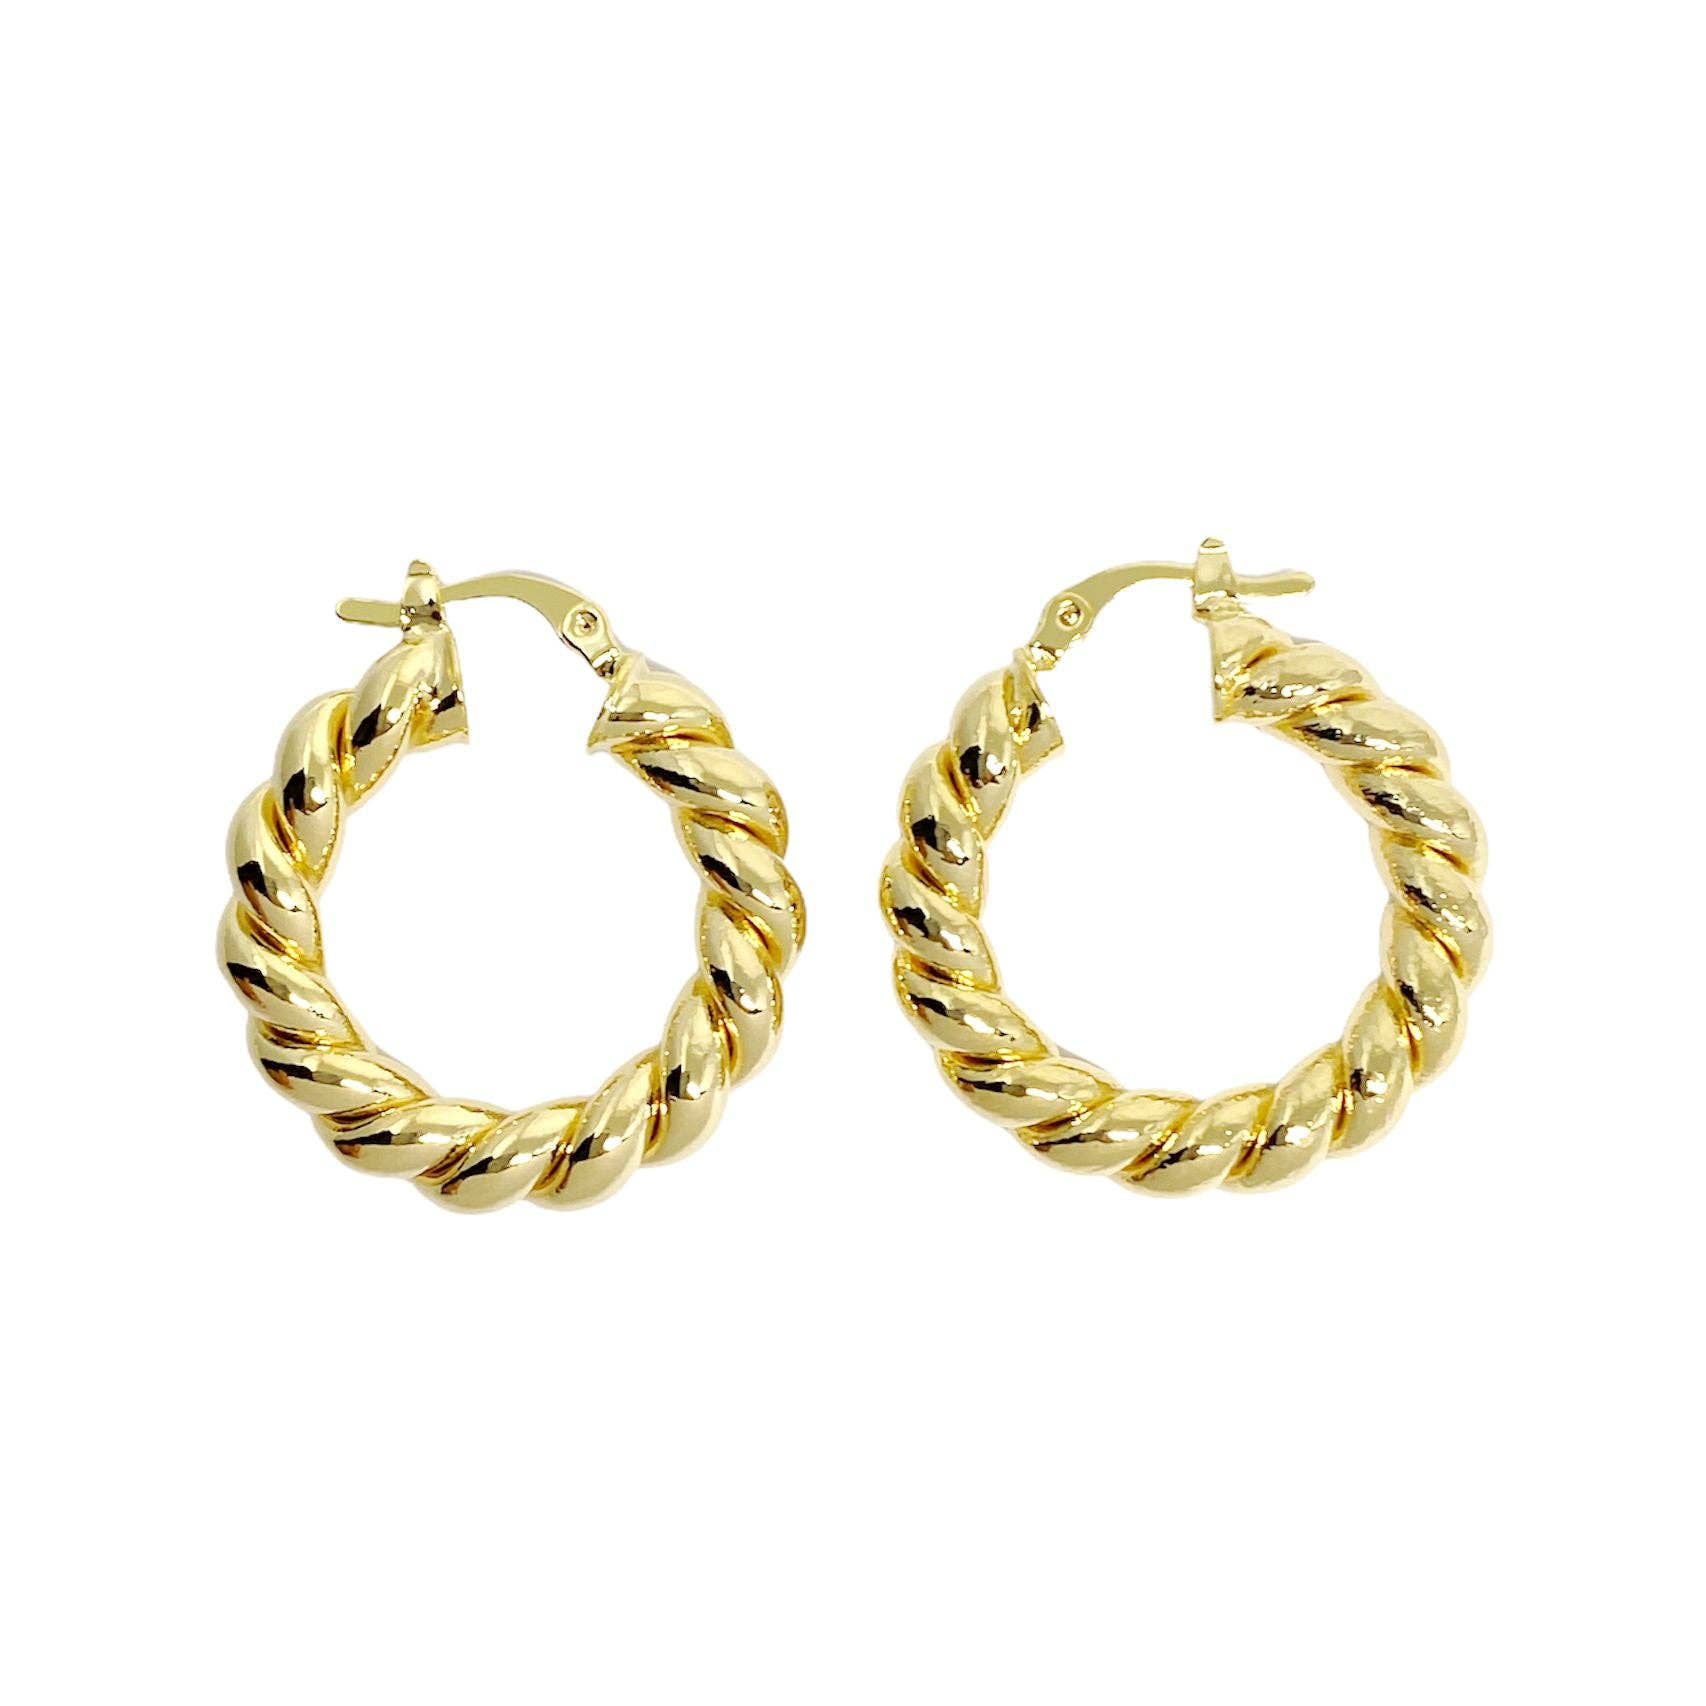 30mm Twisted Tube Hoop Earrings, 18k Gold Filled - Abigail Fox Designs